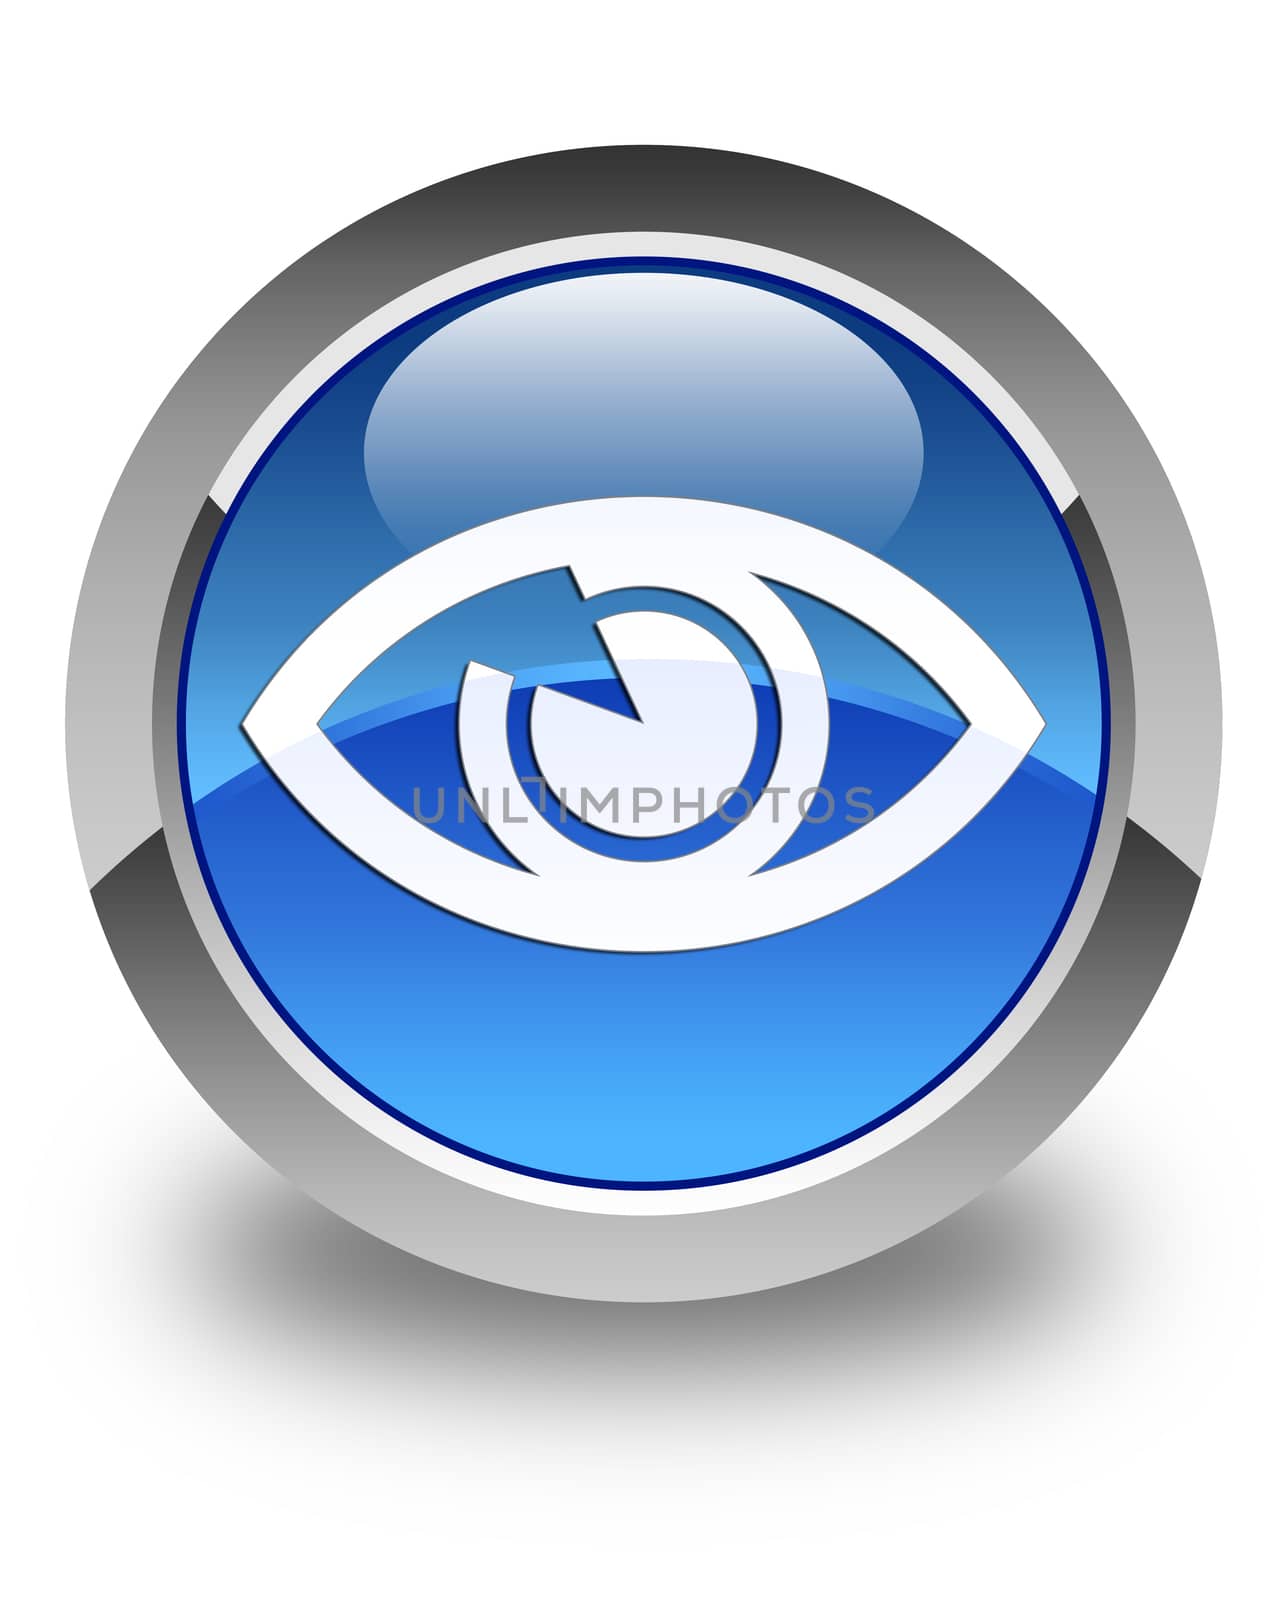 Eye icon glossy blue round button